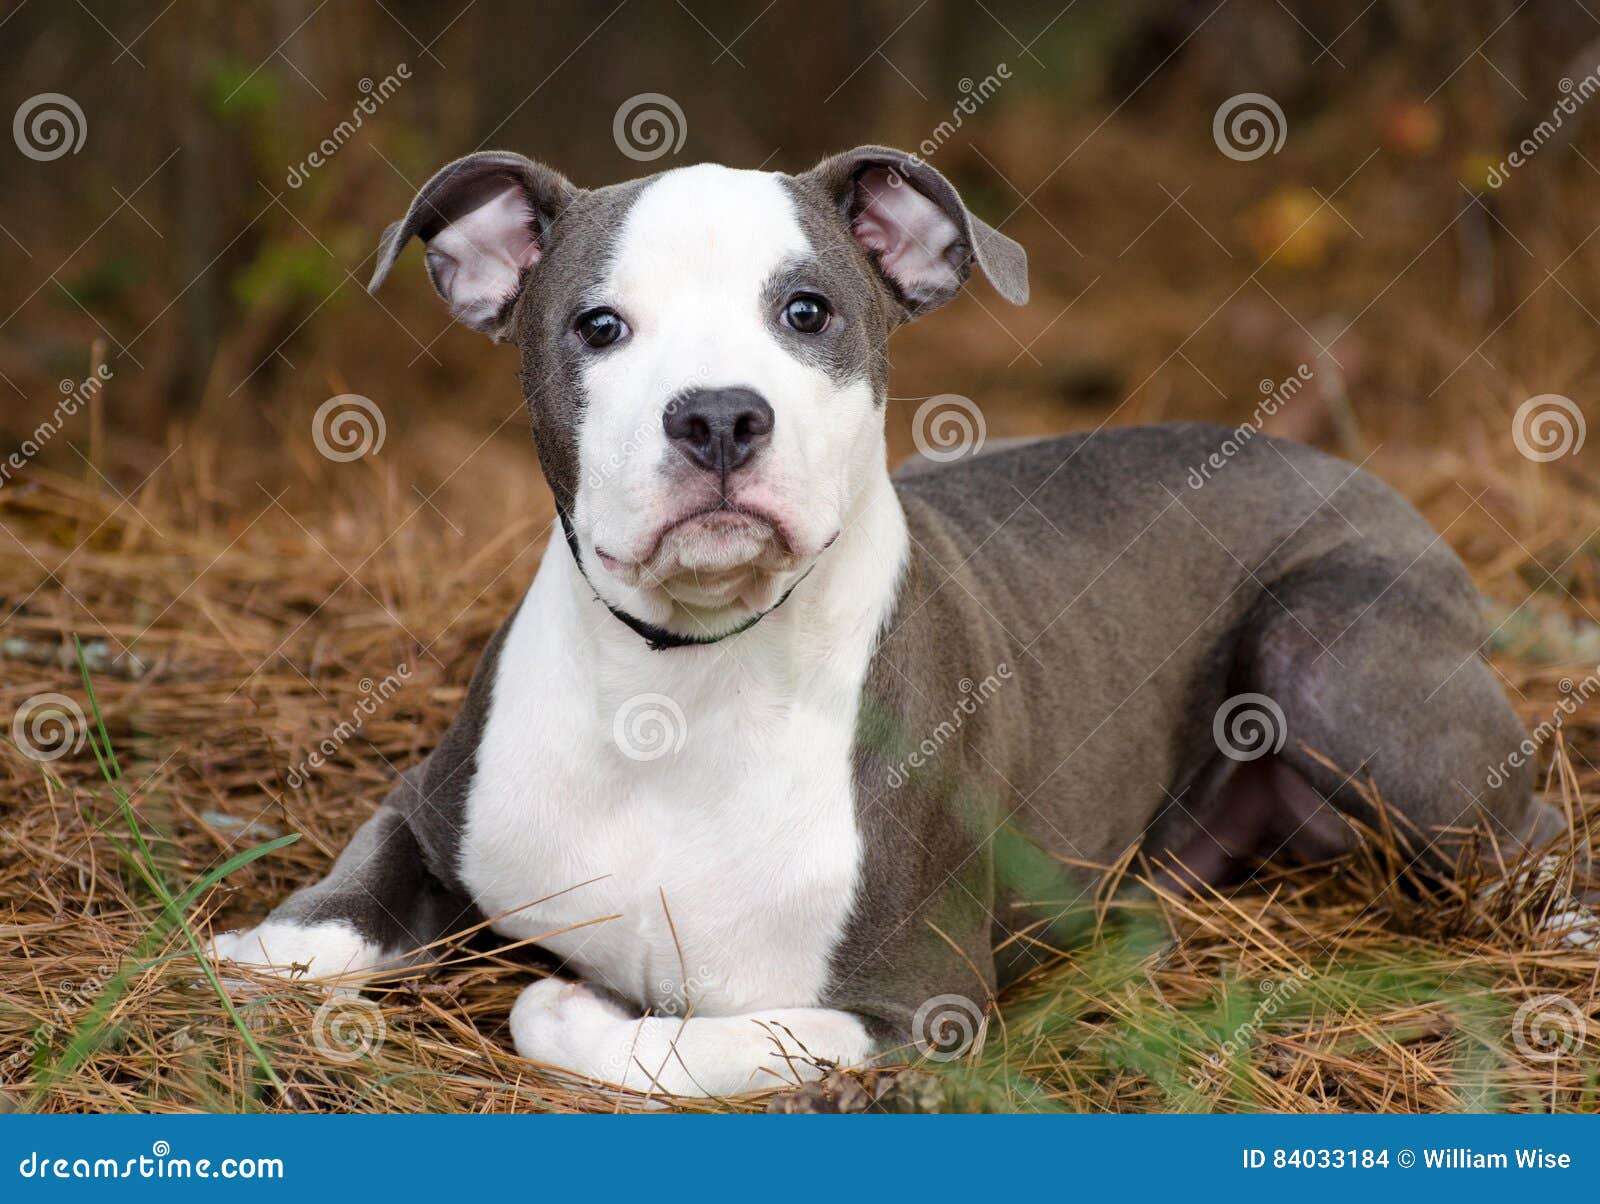 blue and white pitbull puppy